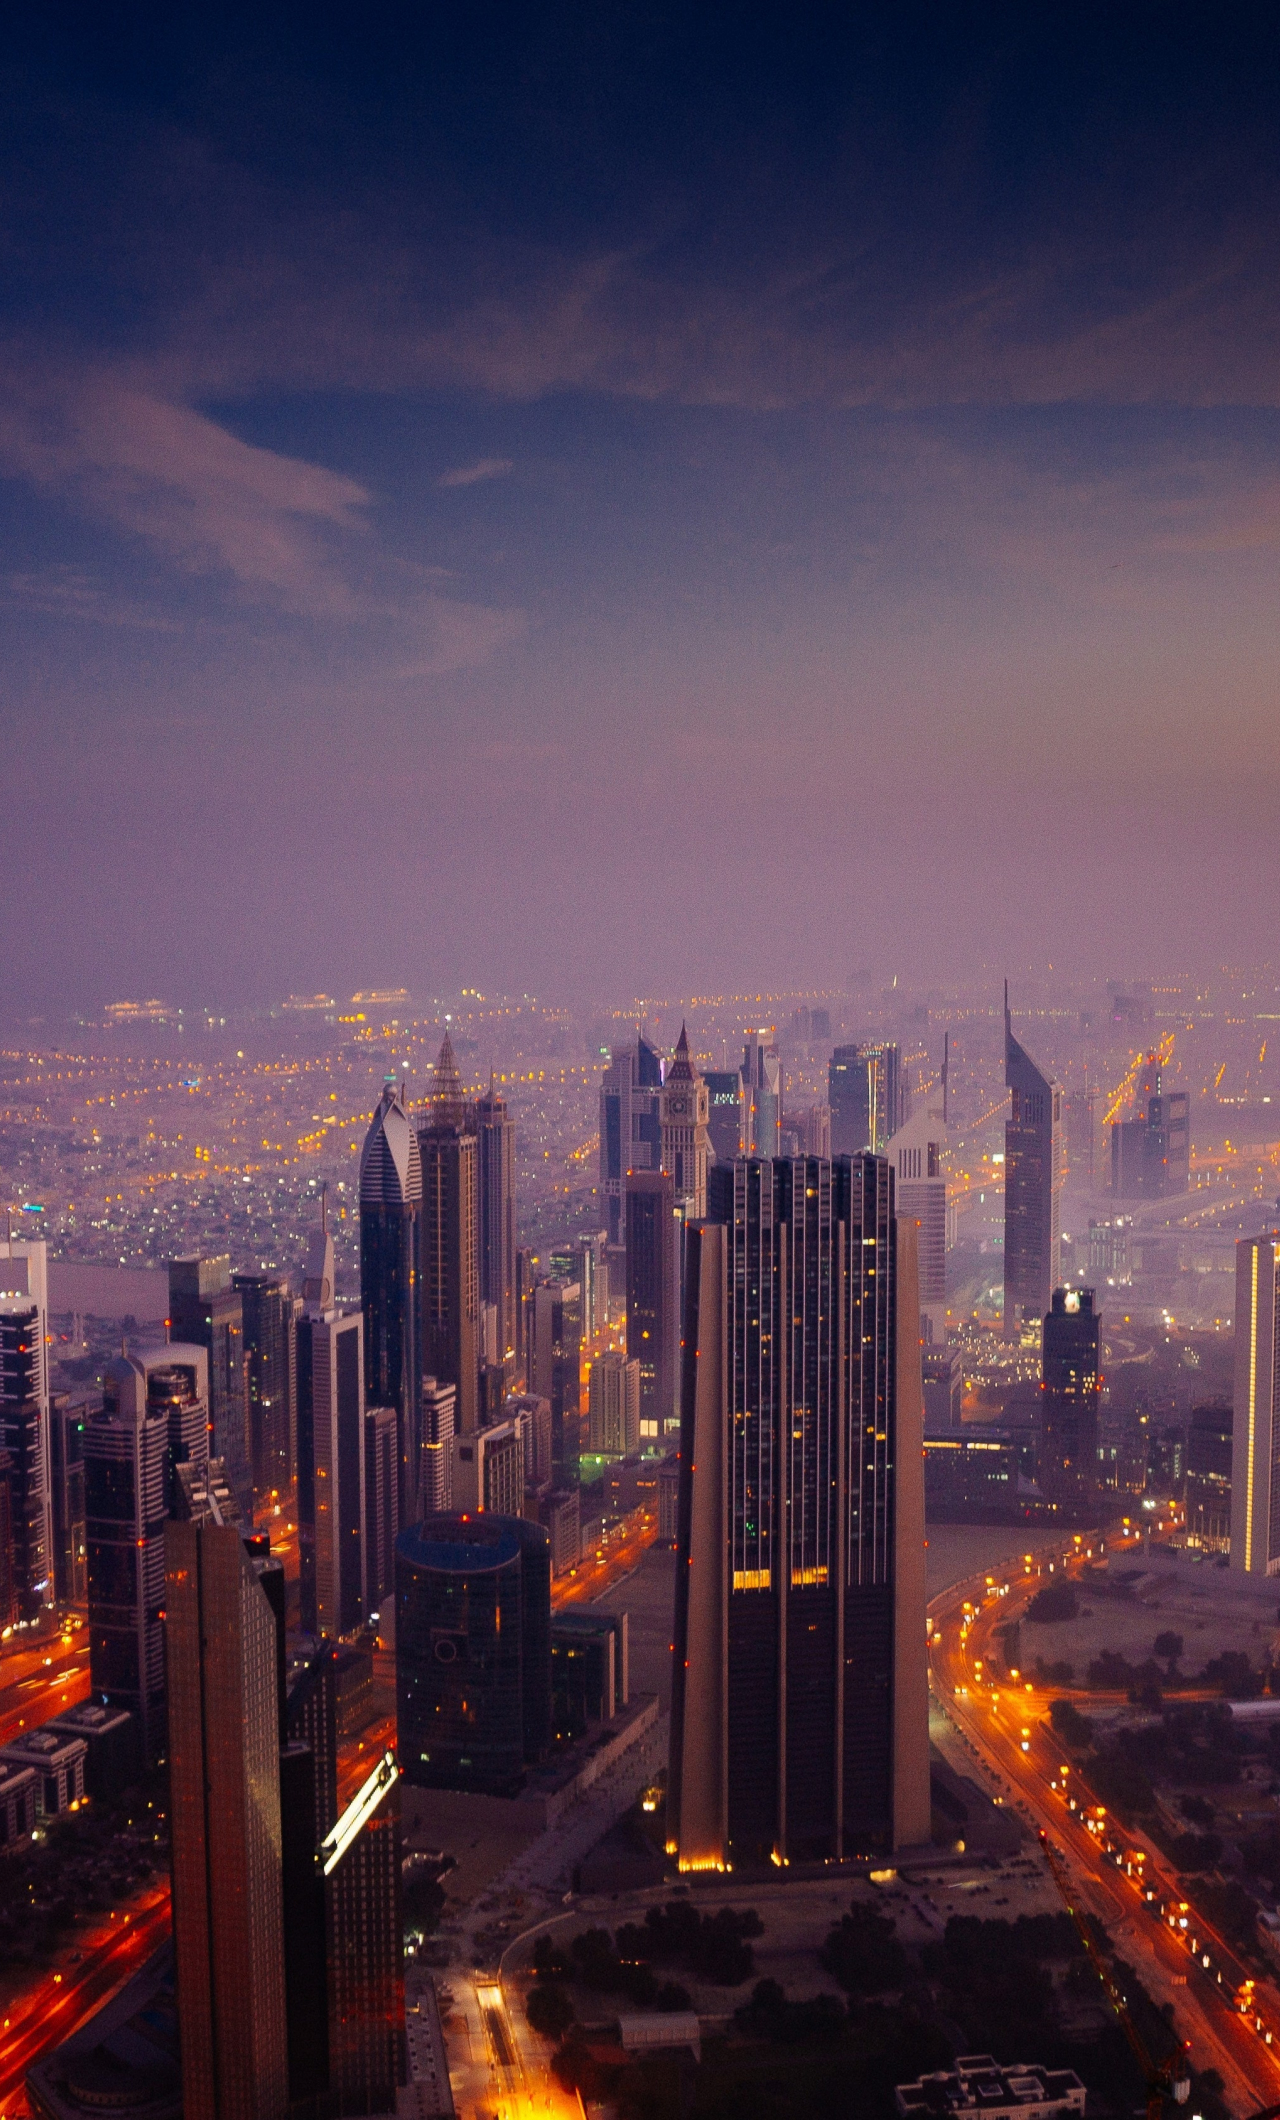 Dubai Night Images - Free Download on Freepik